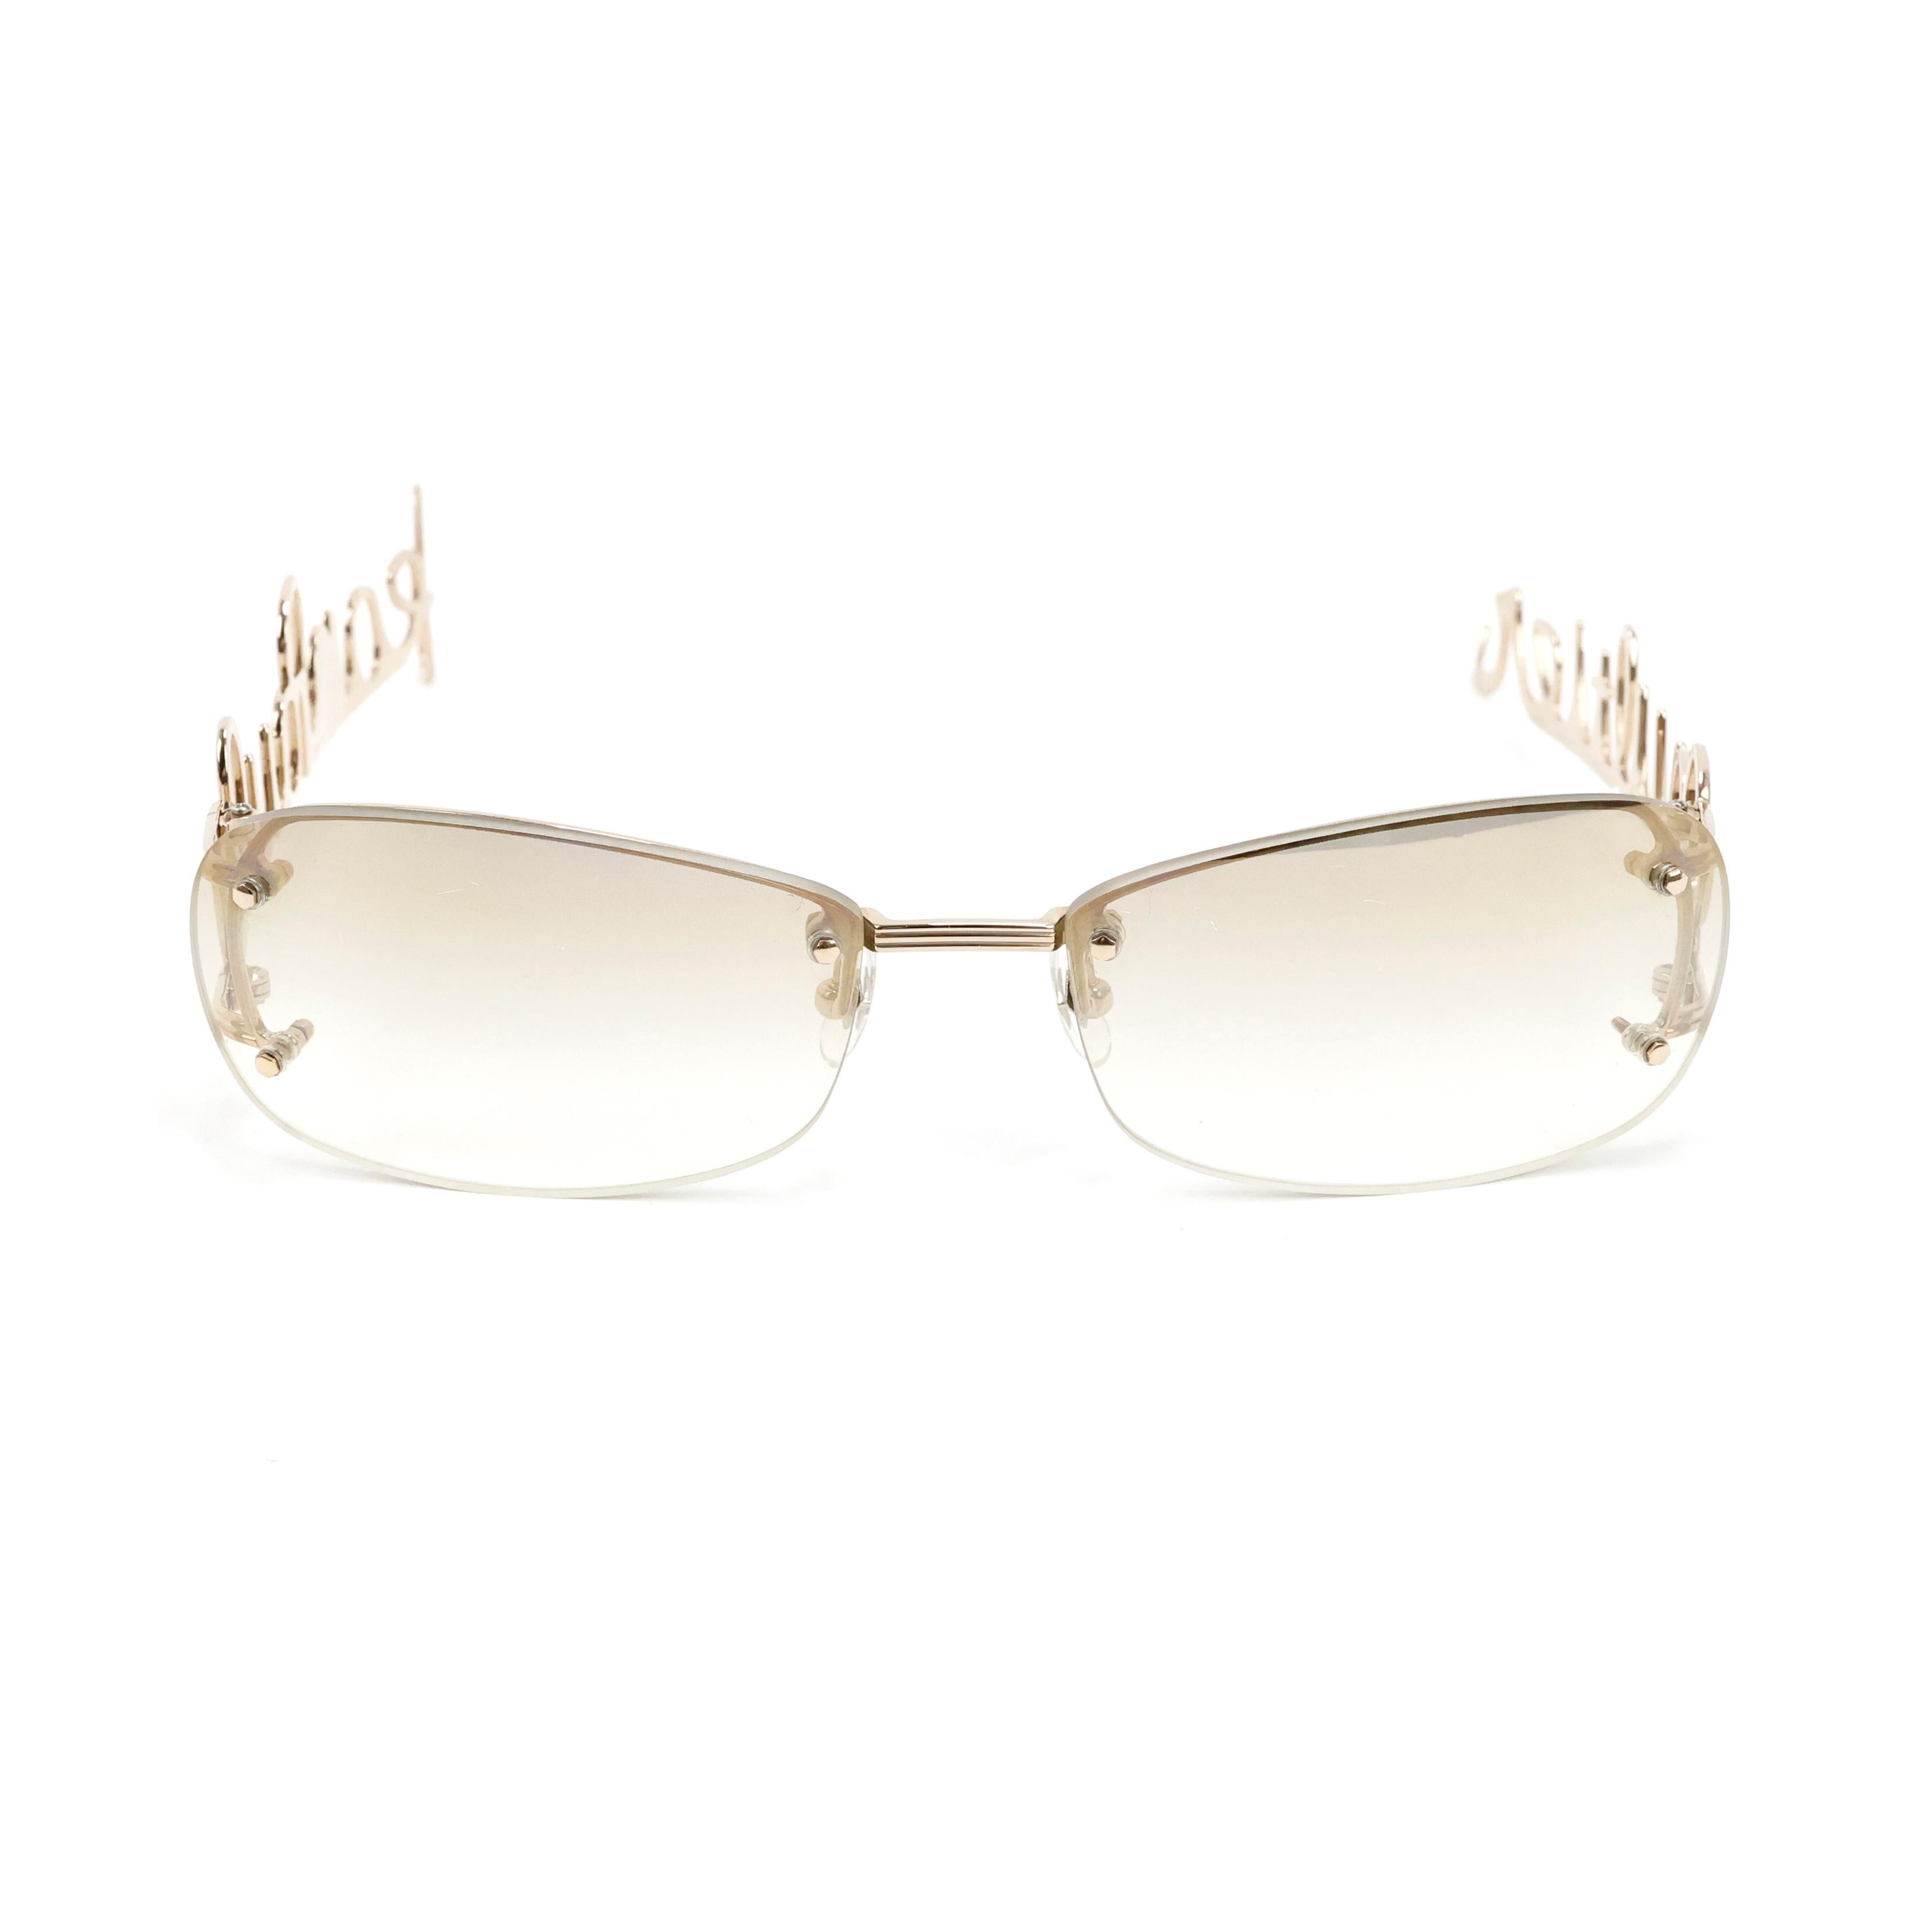 Jean Paul Gaultier Cursive Logo Sunglasses In Excellent Condition For Sale In Bressanone, IT